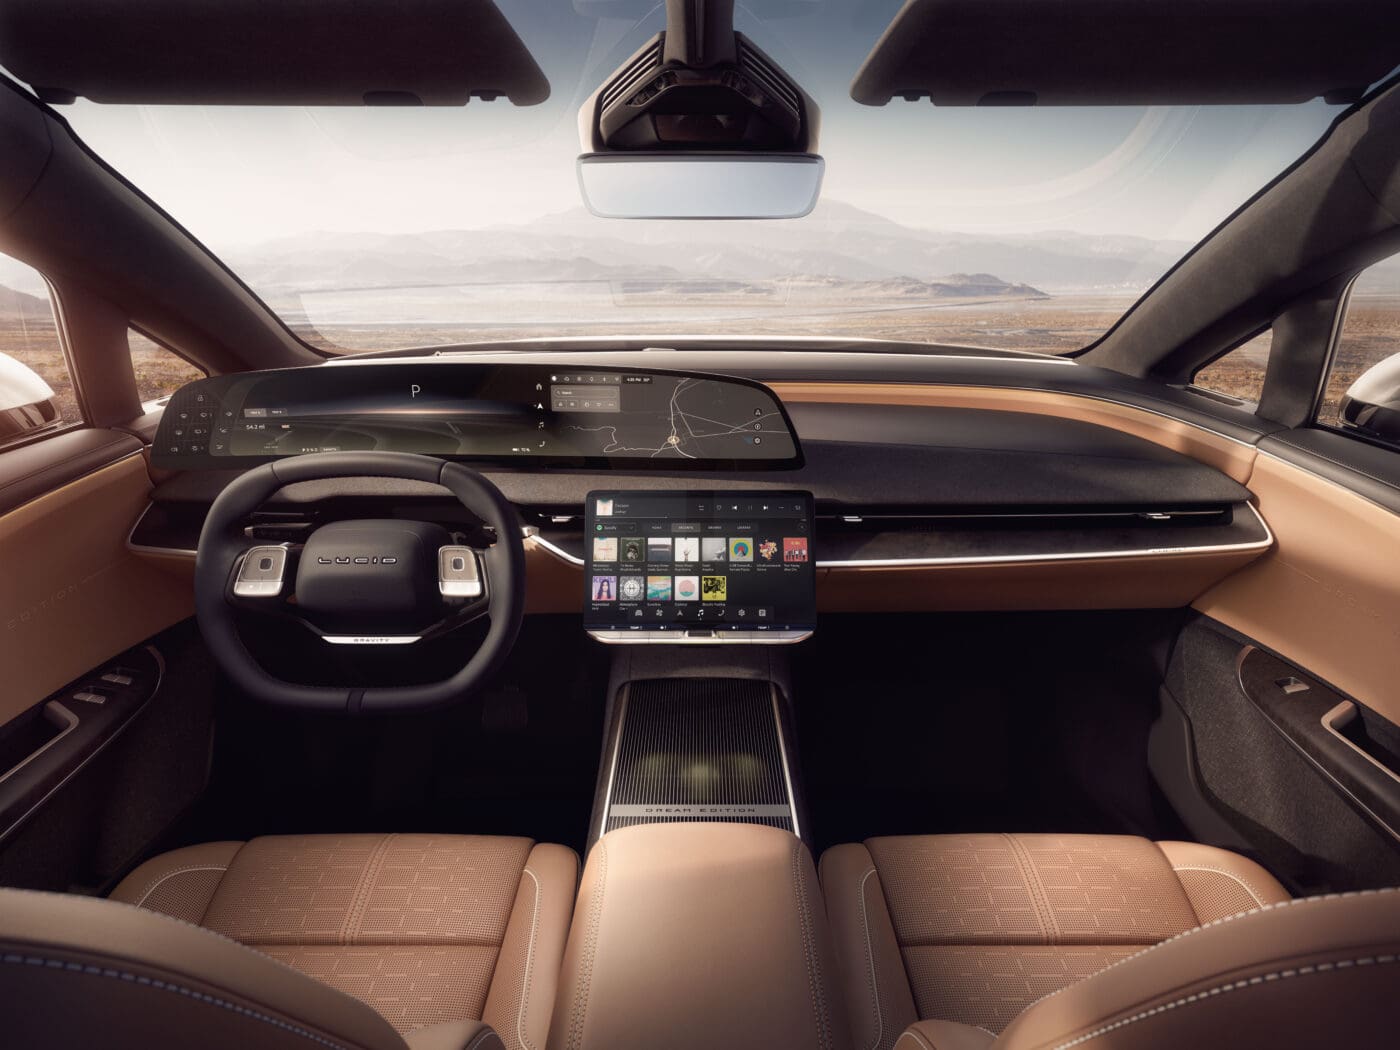 An interior shot showcasing the car's steering wheel and dashboard.